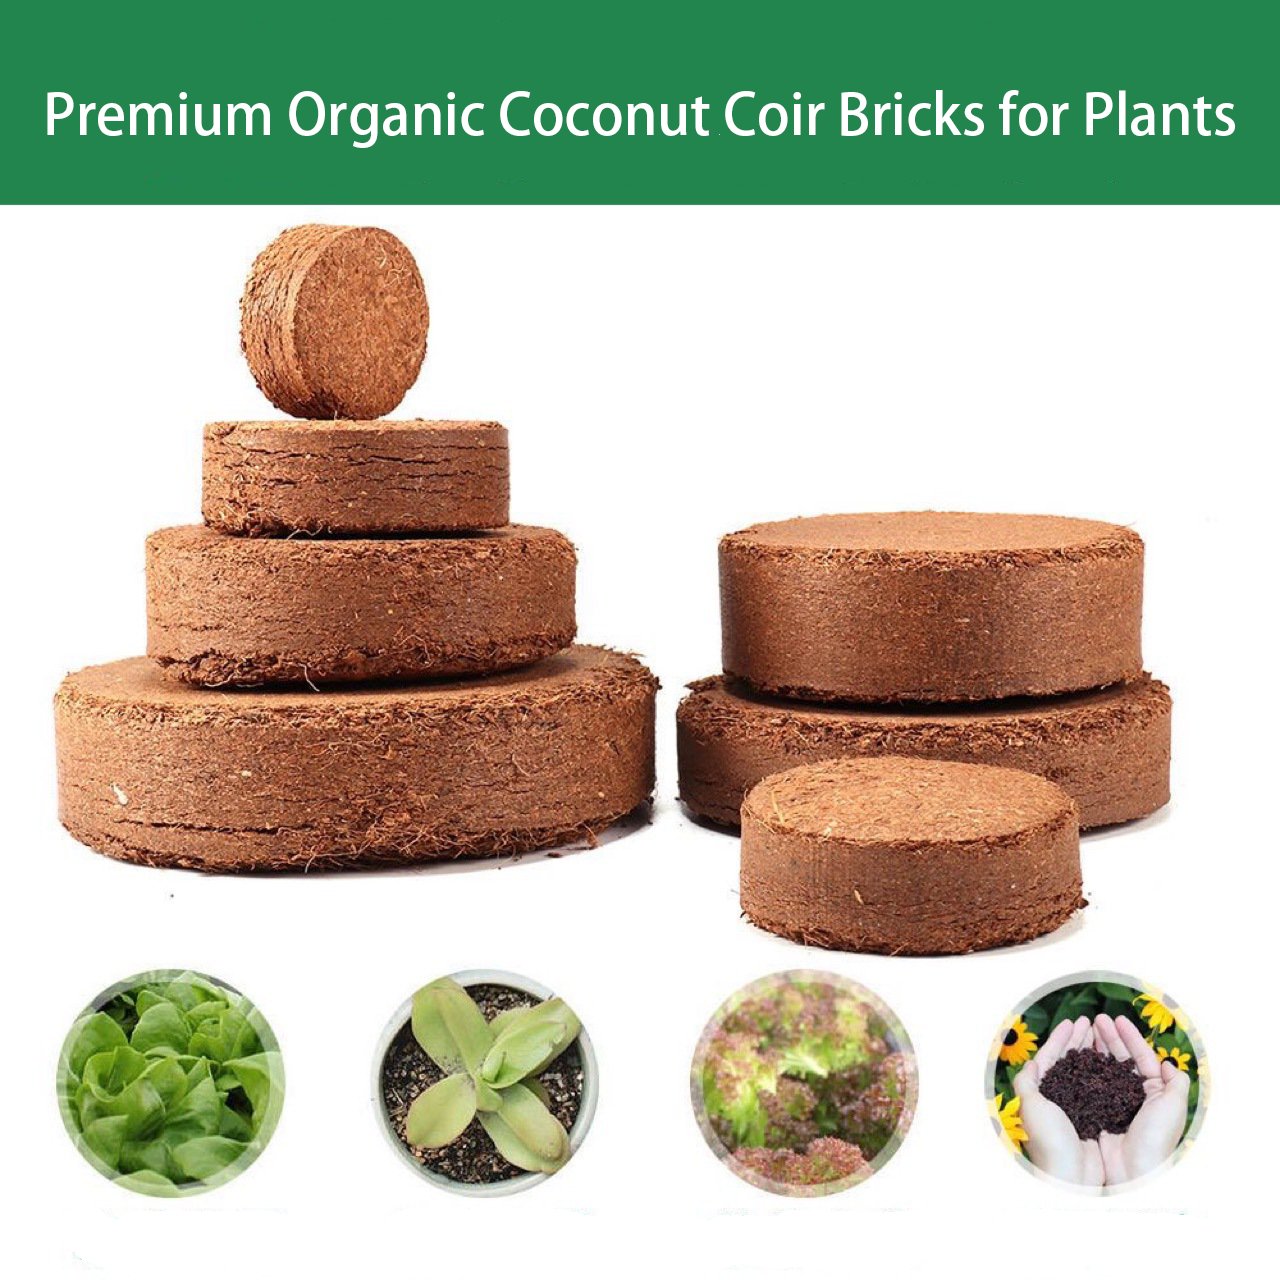 ✨Premium Organic Coconut Coir Bricks for Plants